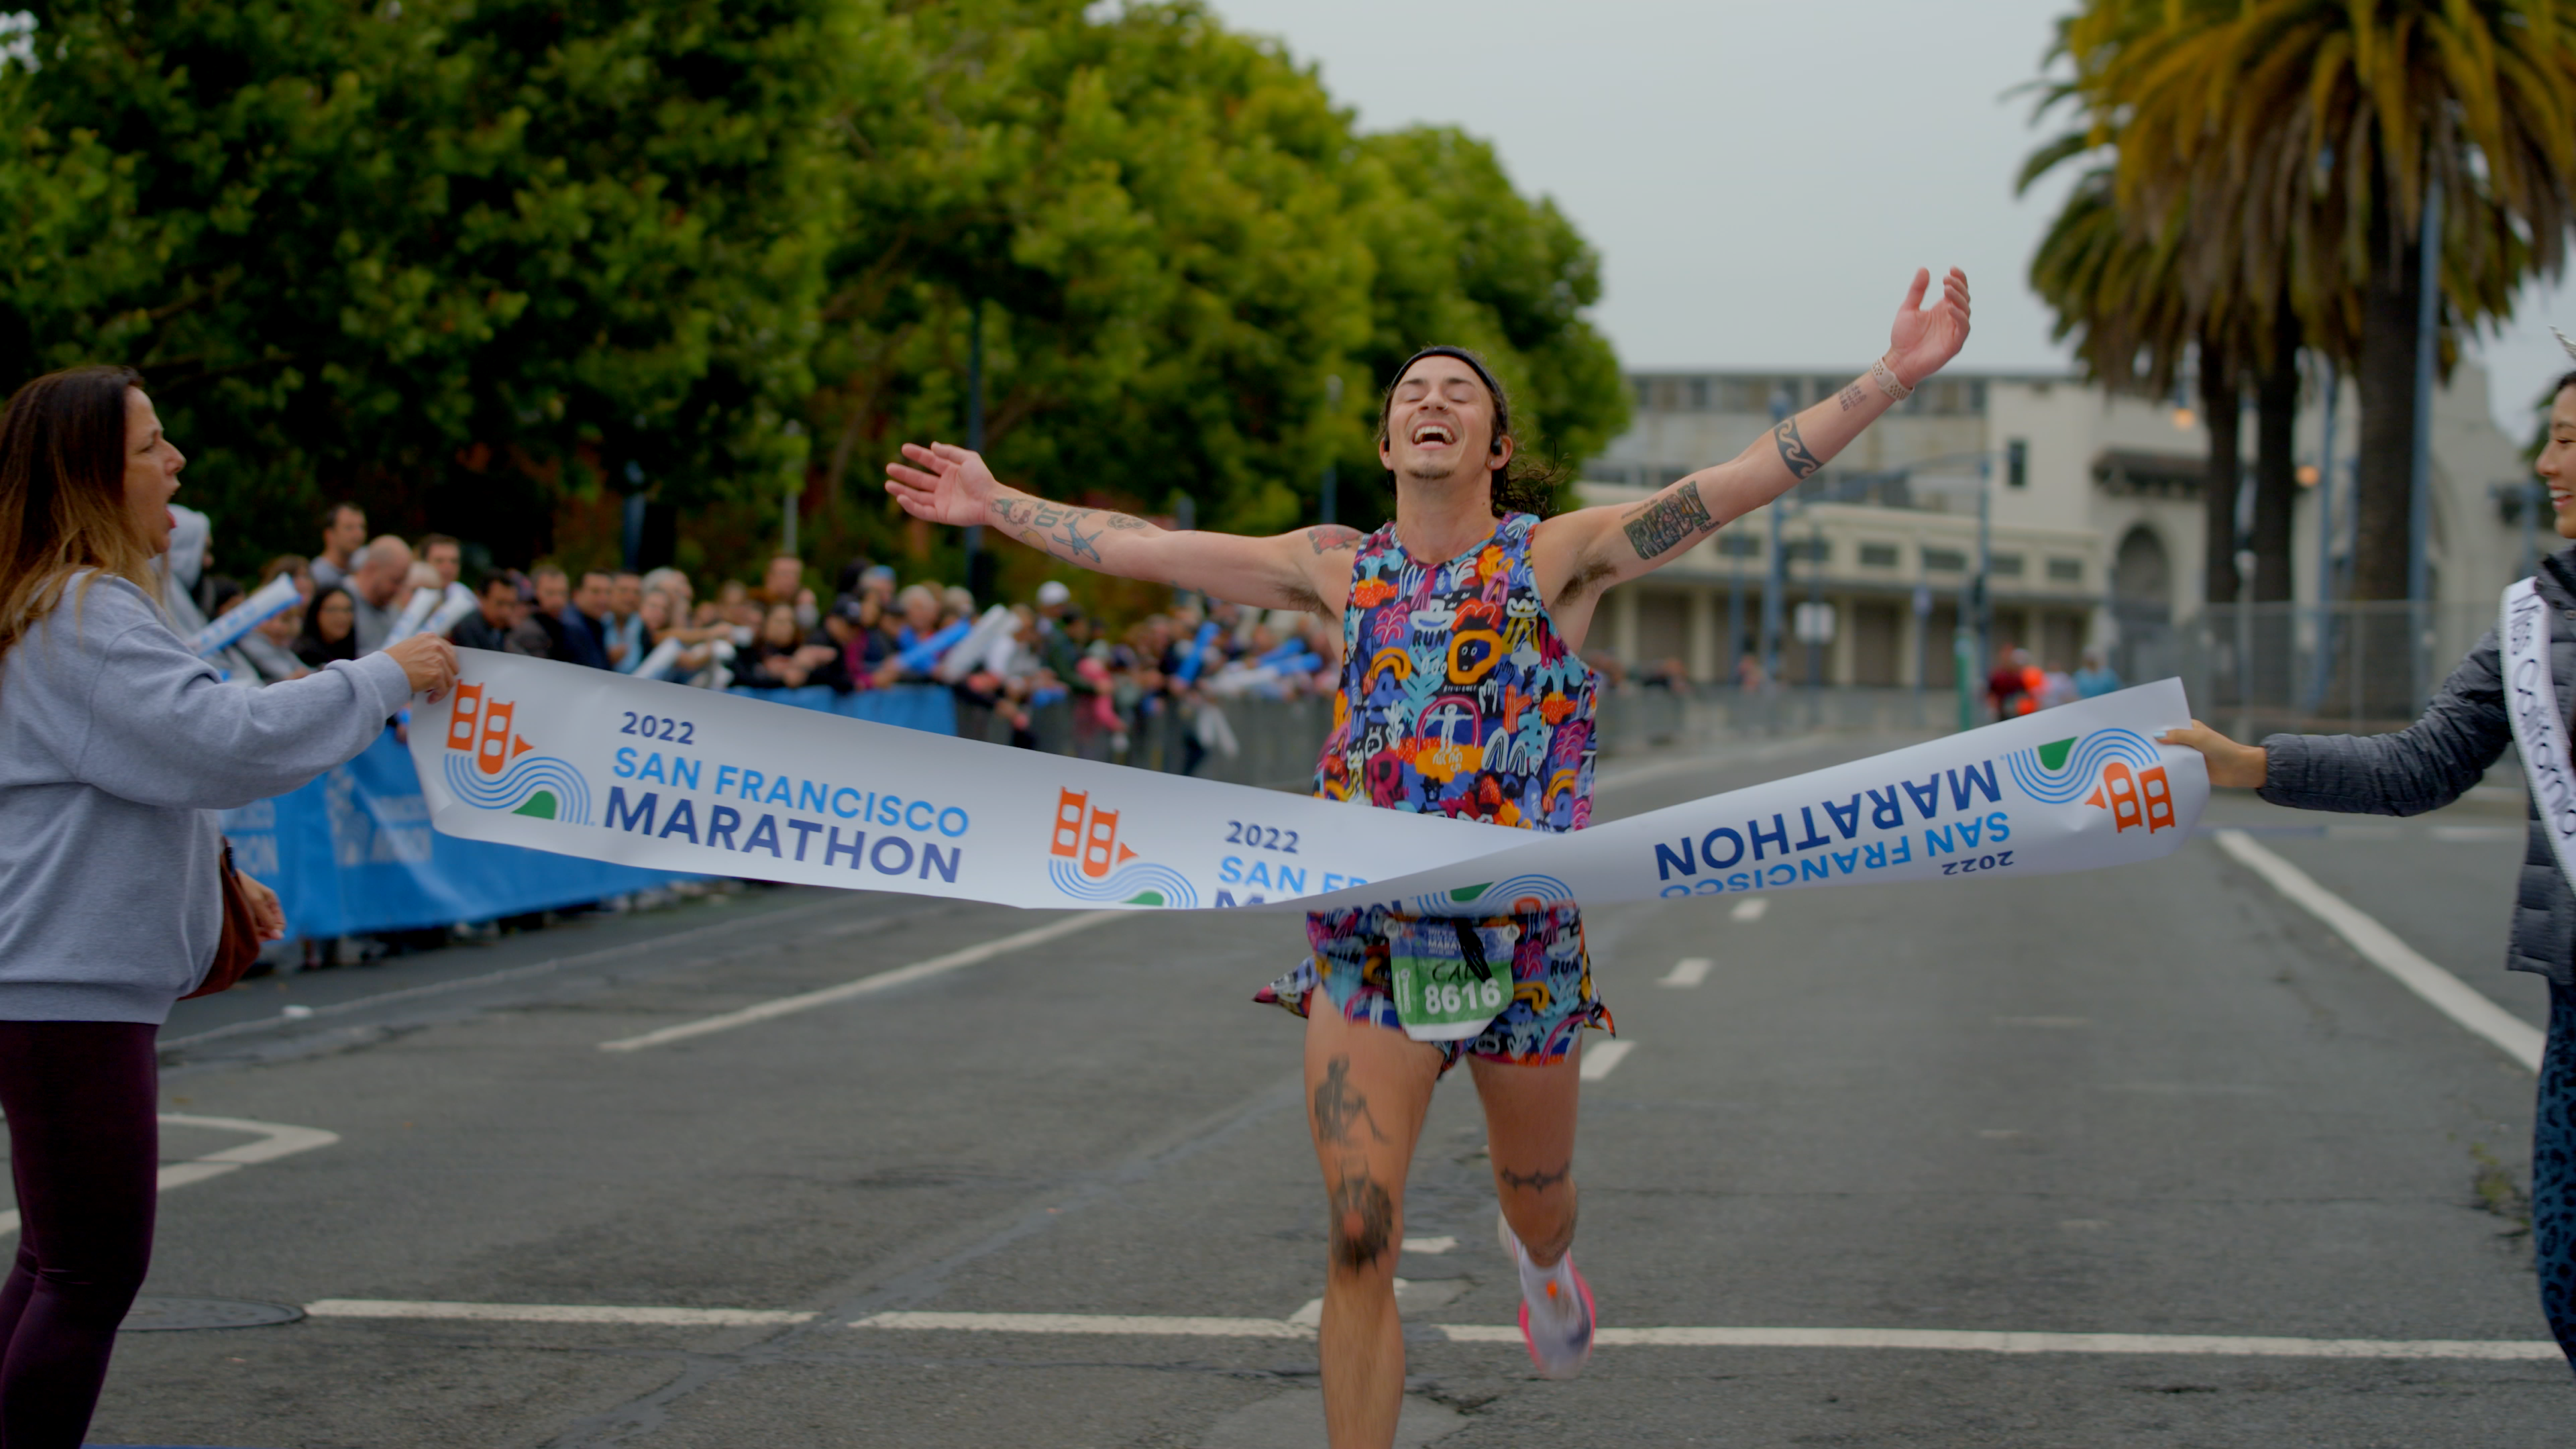 Cal Calamia crosses the finish line at the 2022 San Francisco Marathon